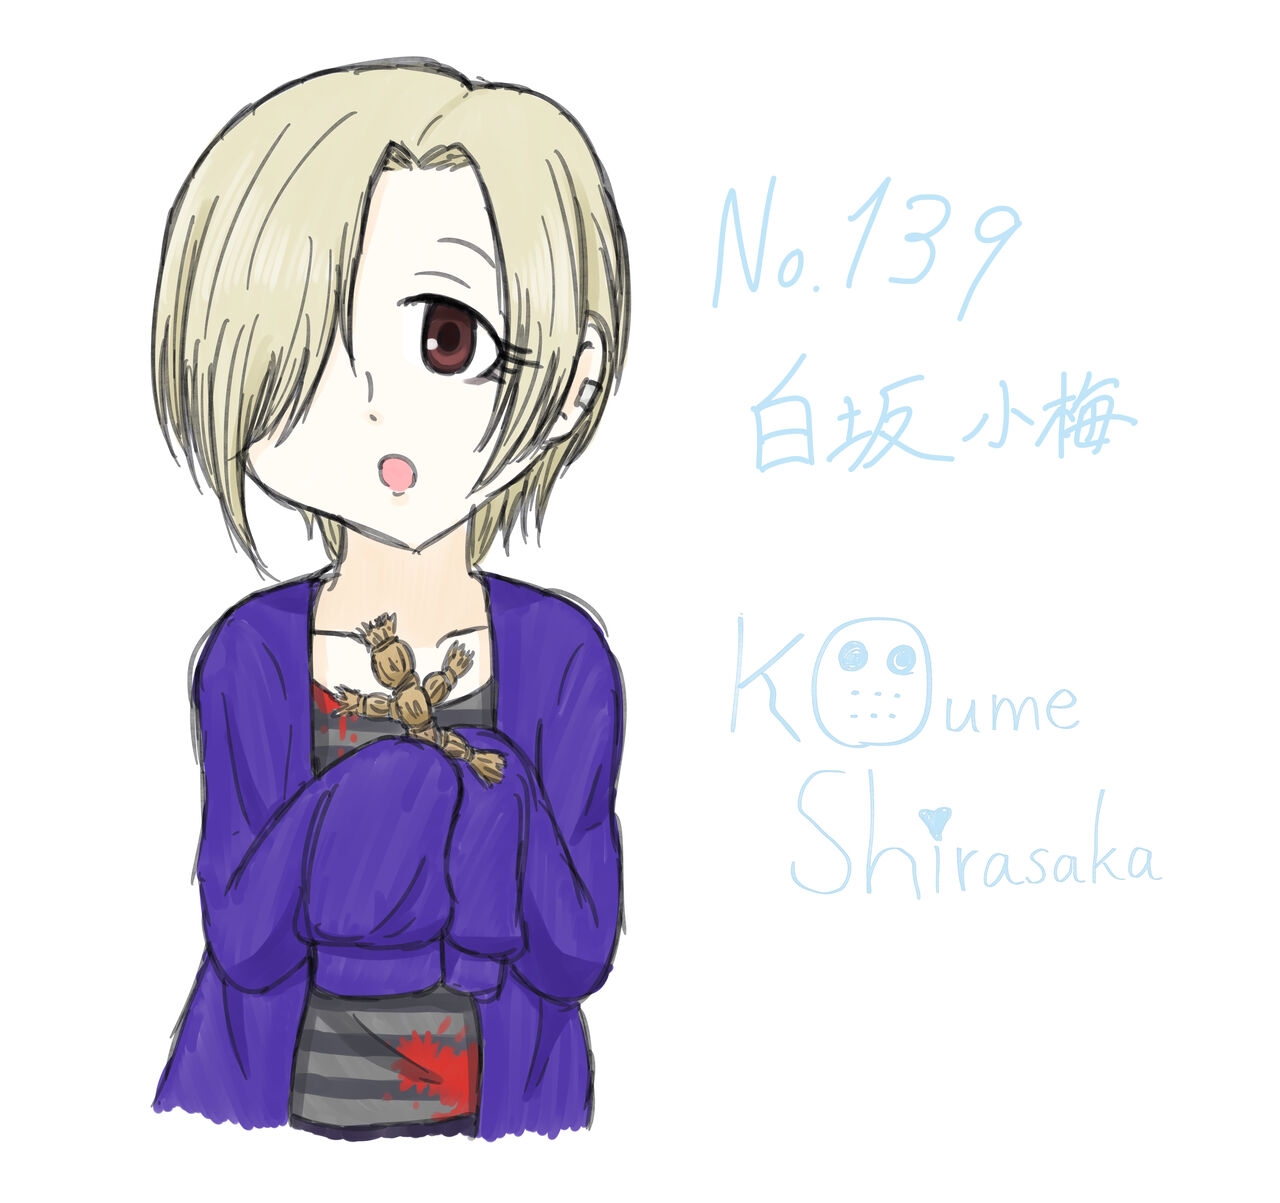 Idolmaster Character Fan Art Gallery - Koume Shirasaka 114